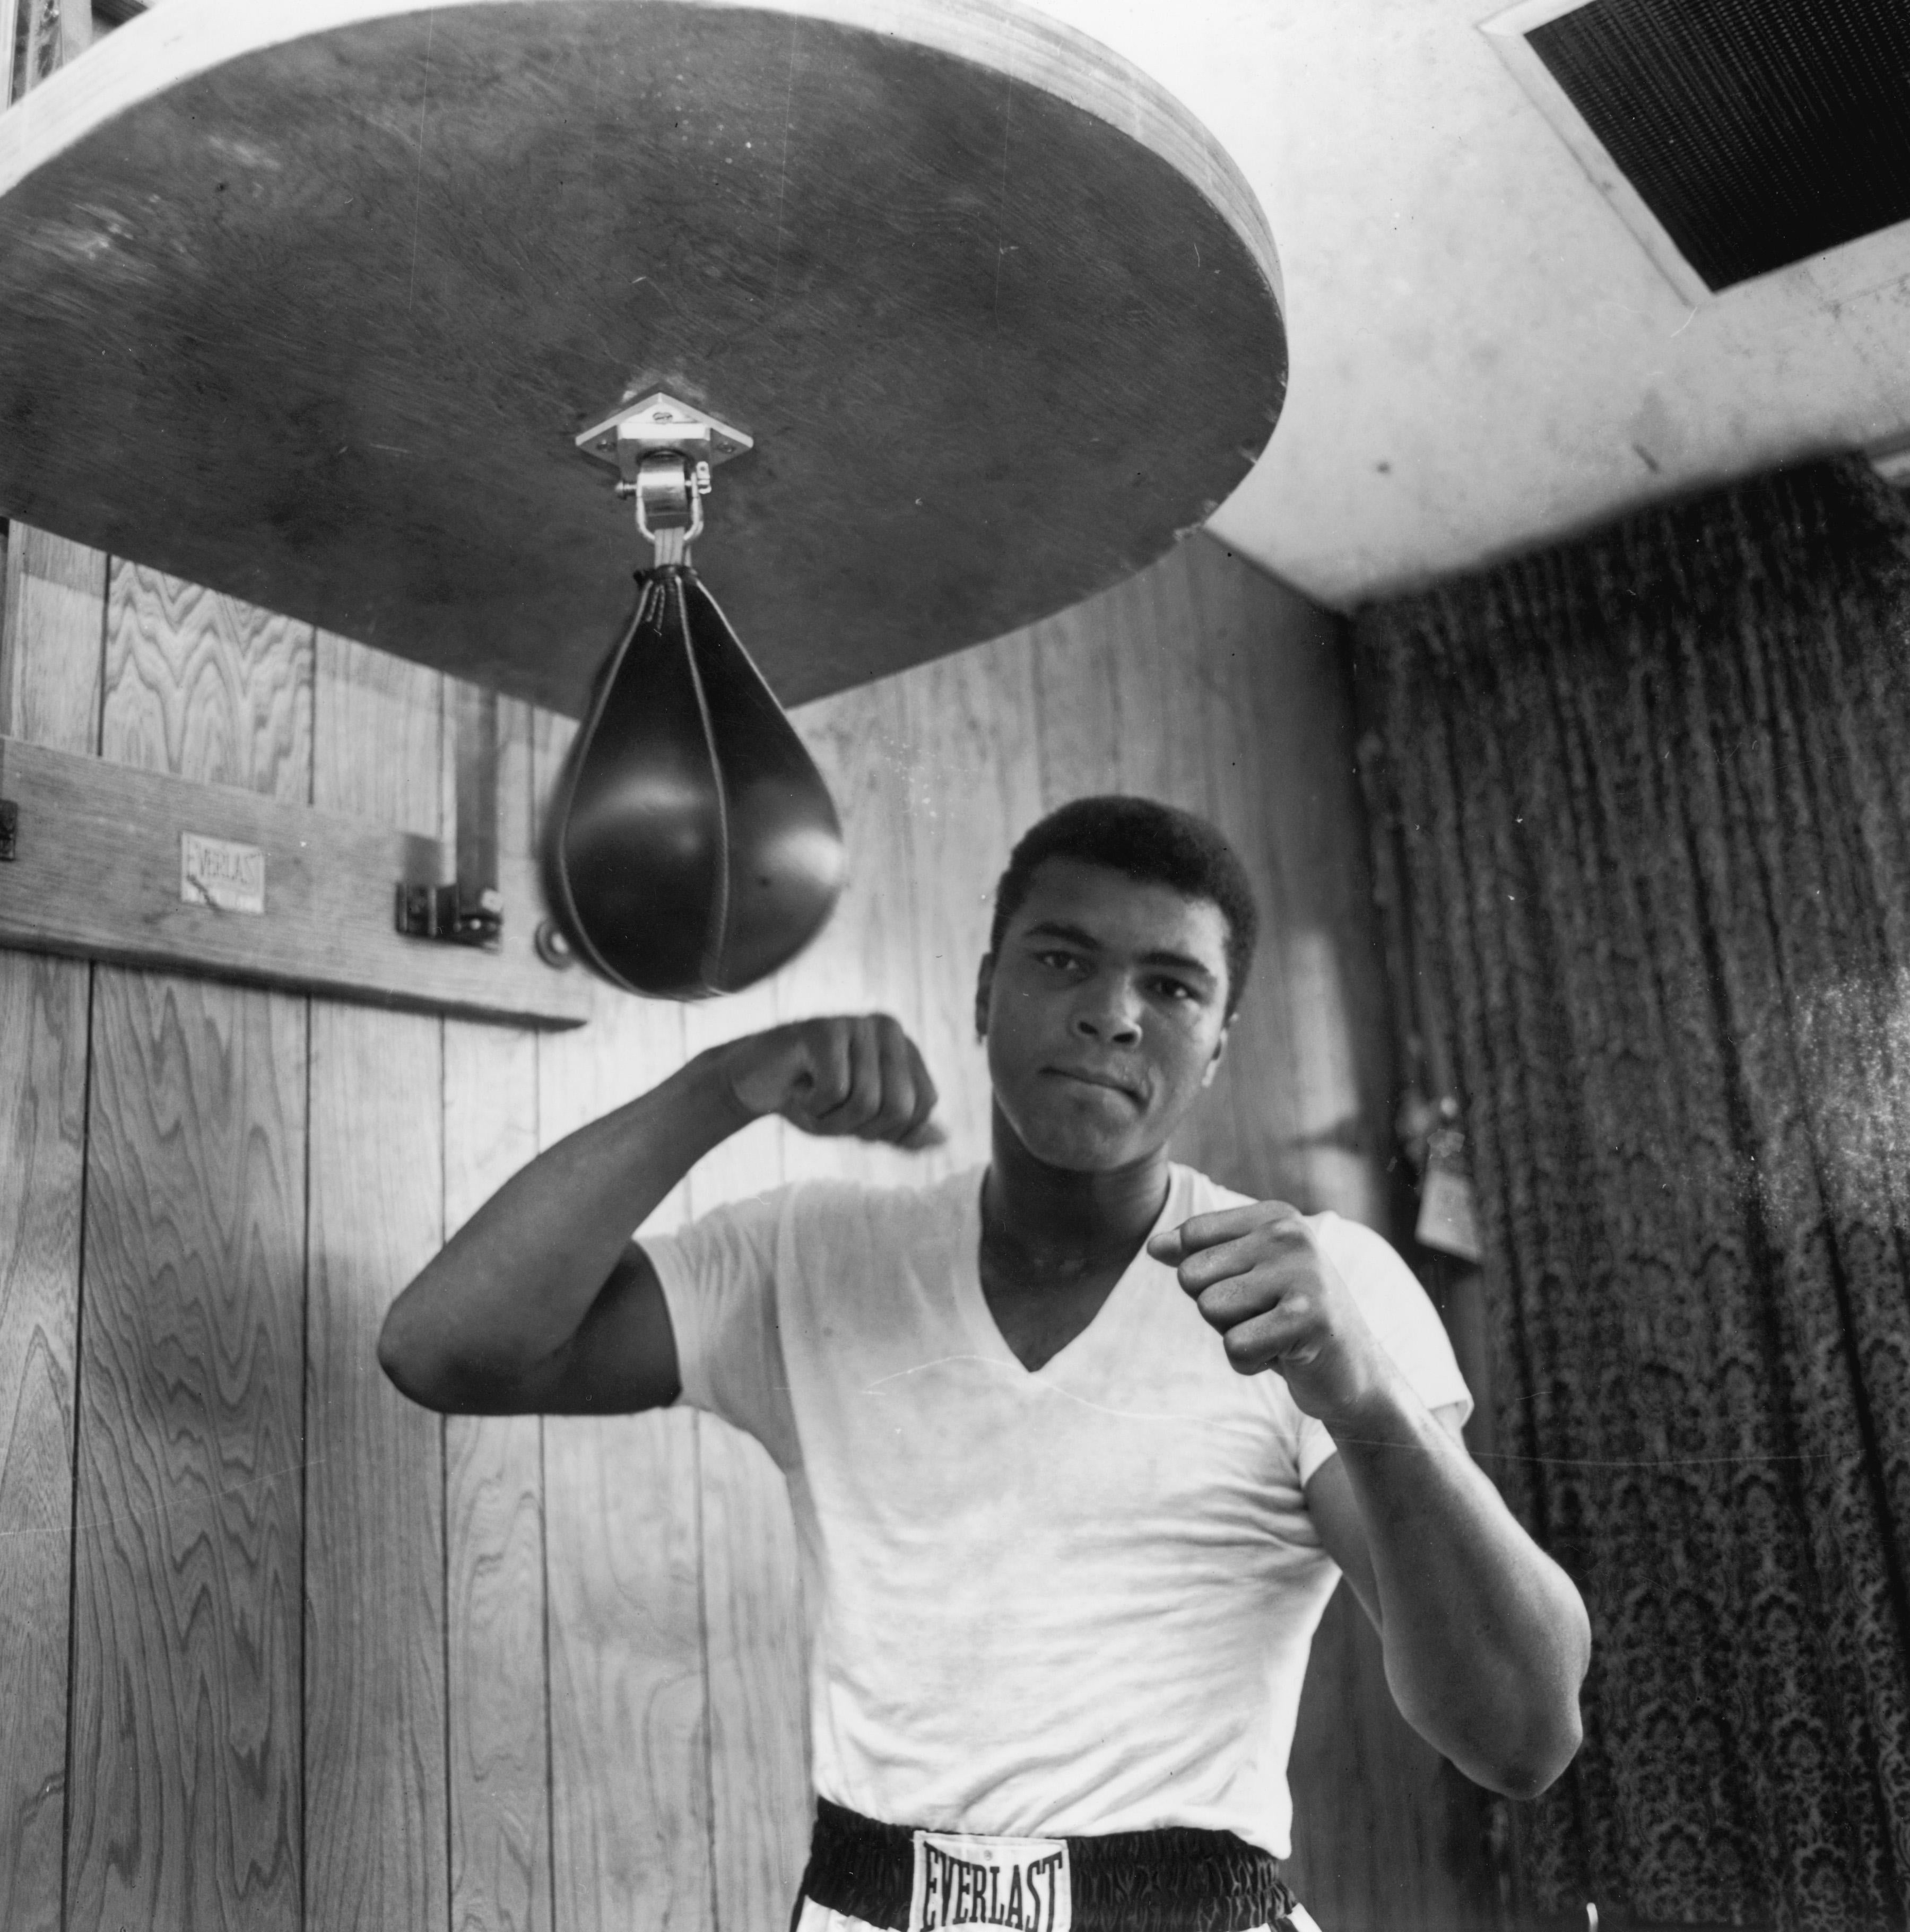 Harry Benson 'Ali in Training' Fotografiedruck in limitierter Auflage, 30 x 30